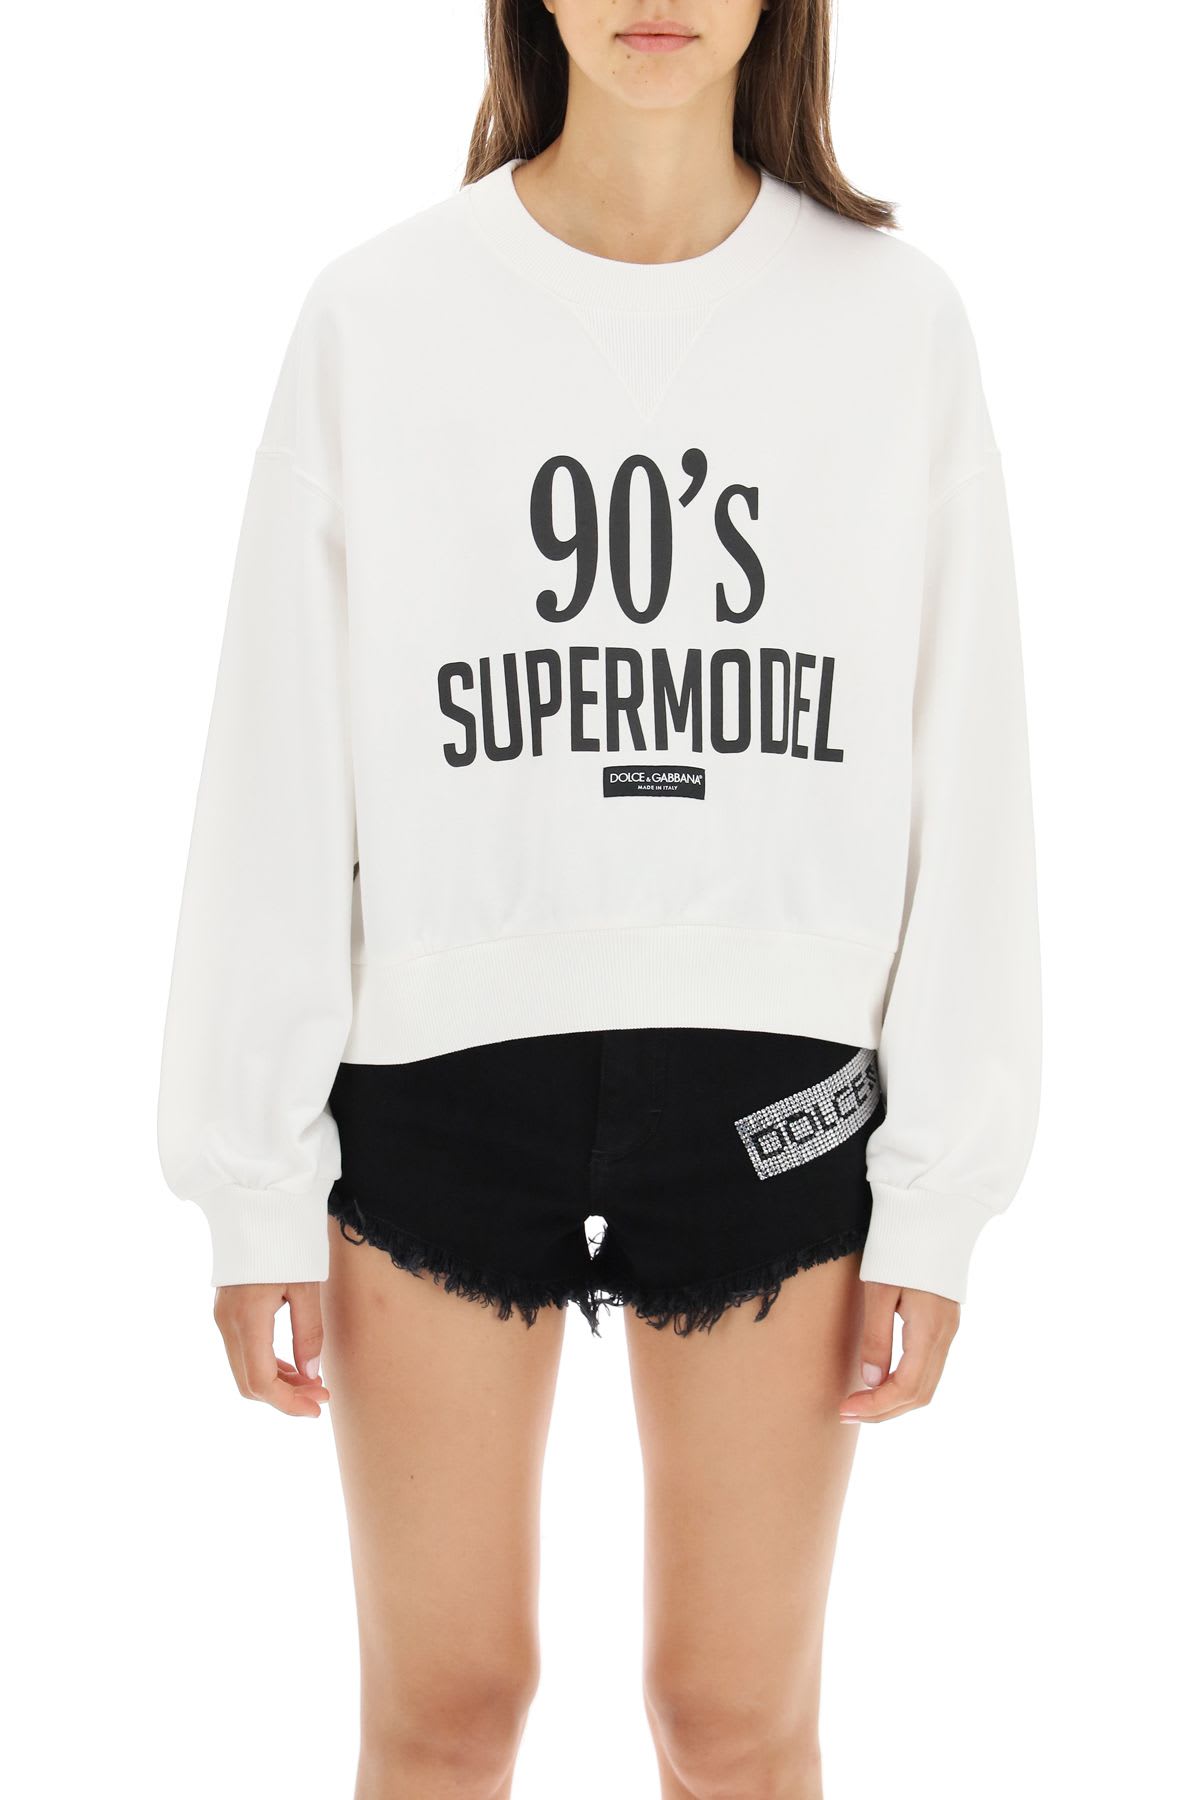 Dolce & Gabbana Cropped Sweatshirt 90's Supermodel | italist, ALWAYS LIKE A  SALE